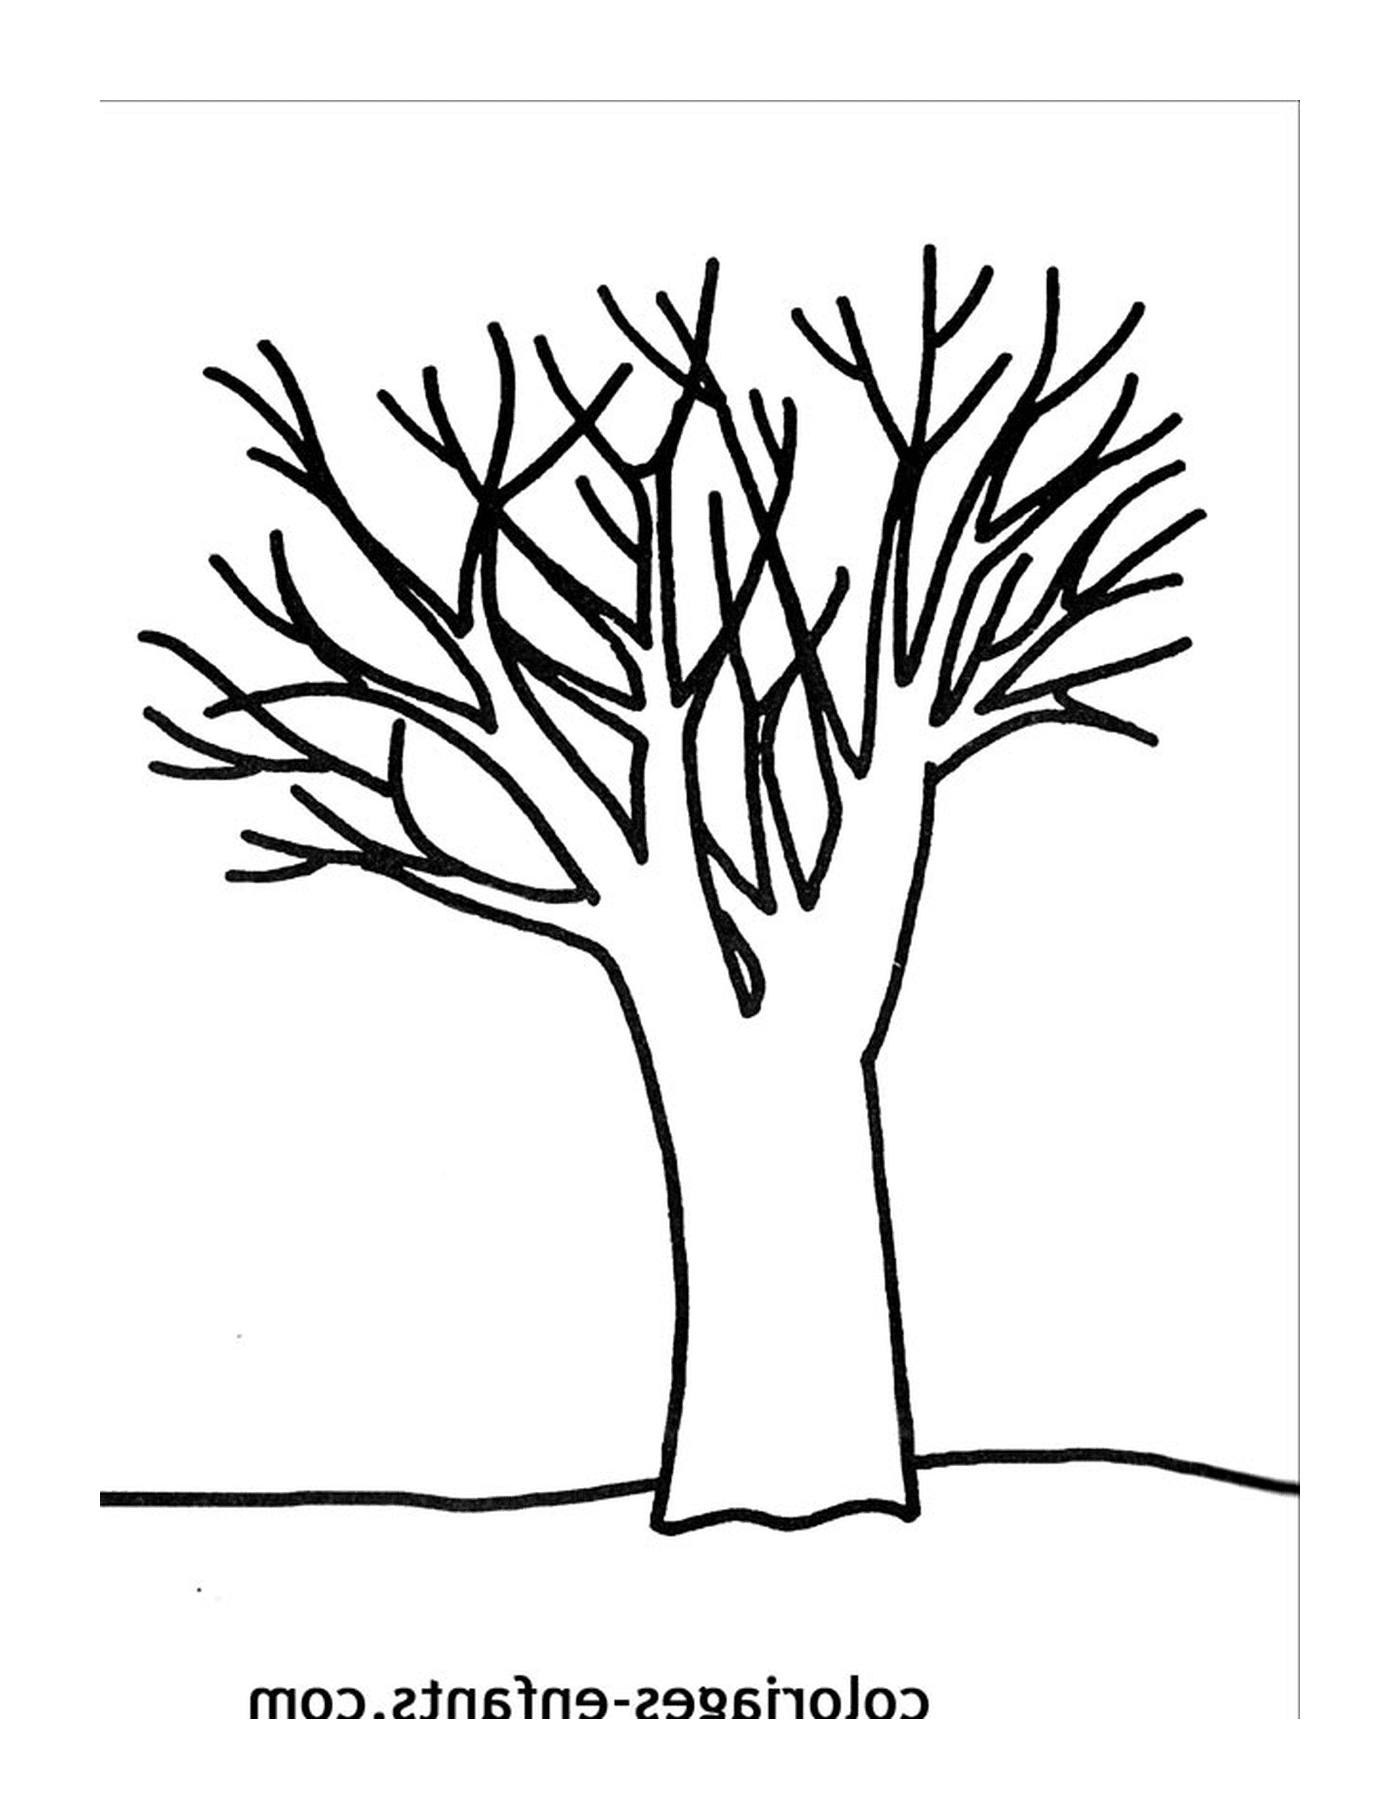  Голое дерево 